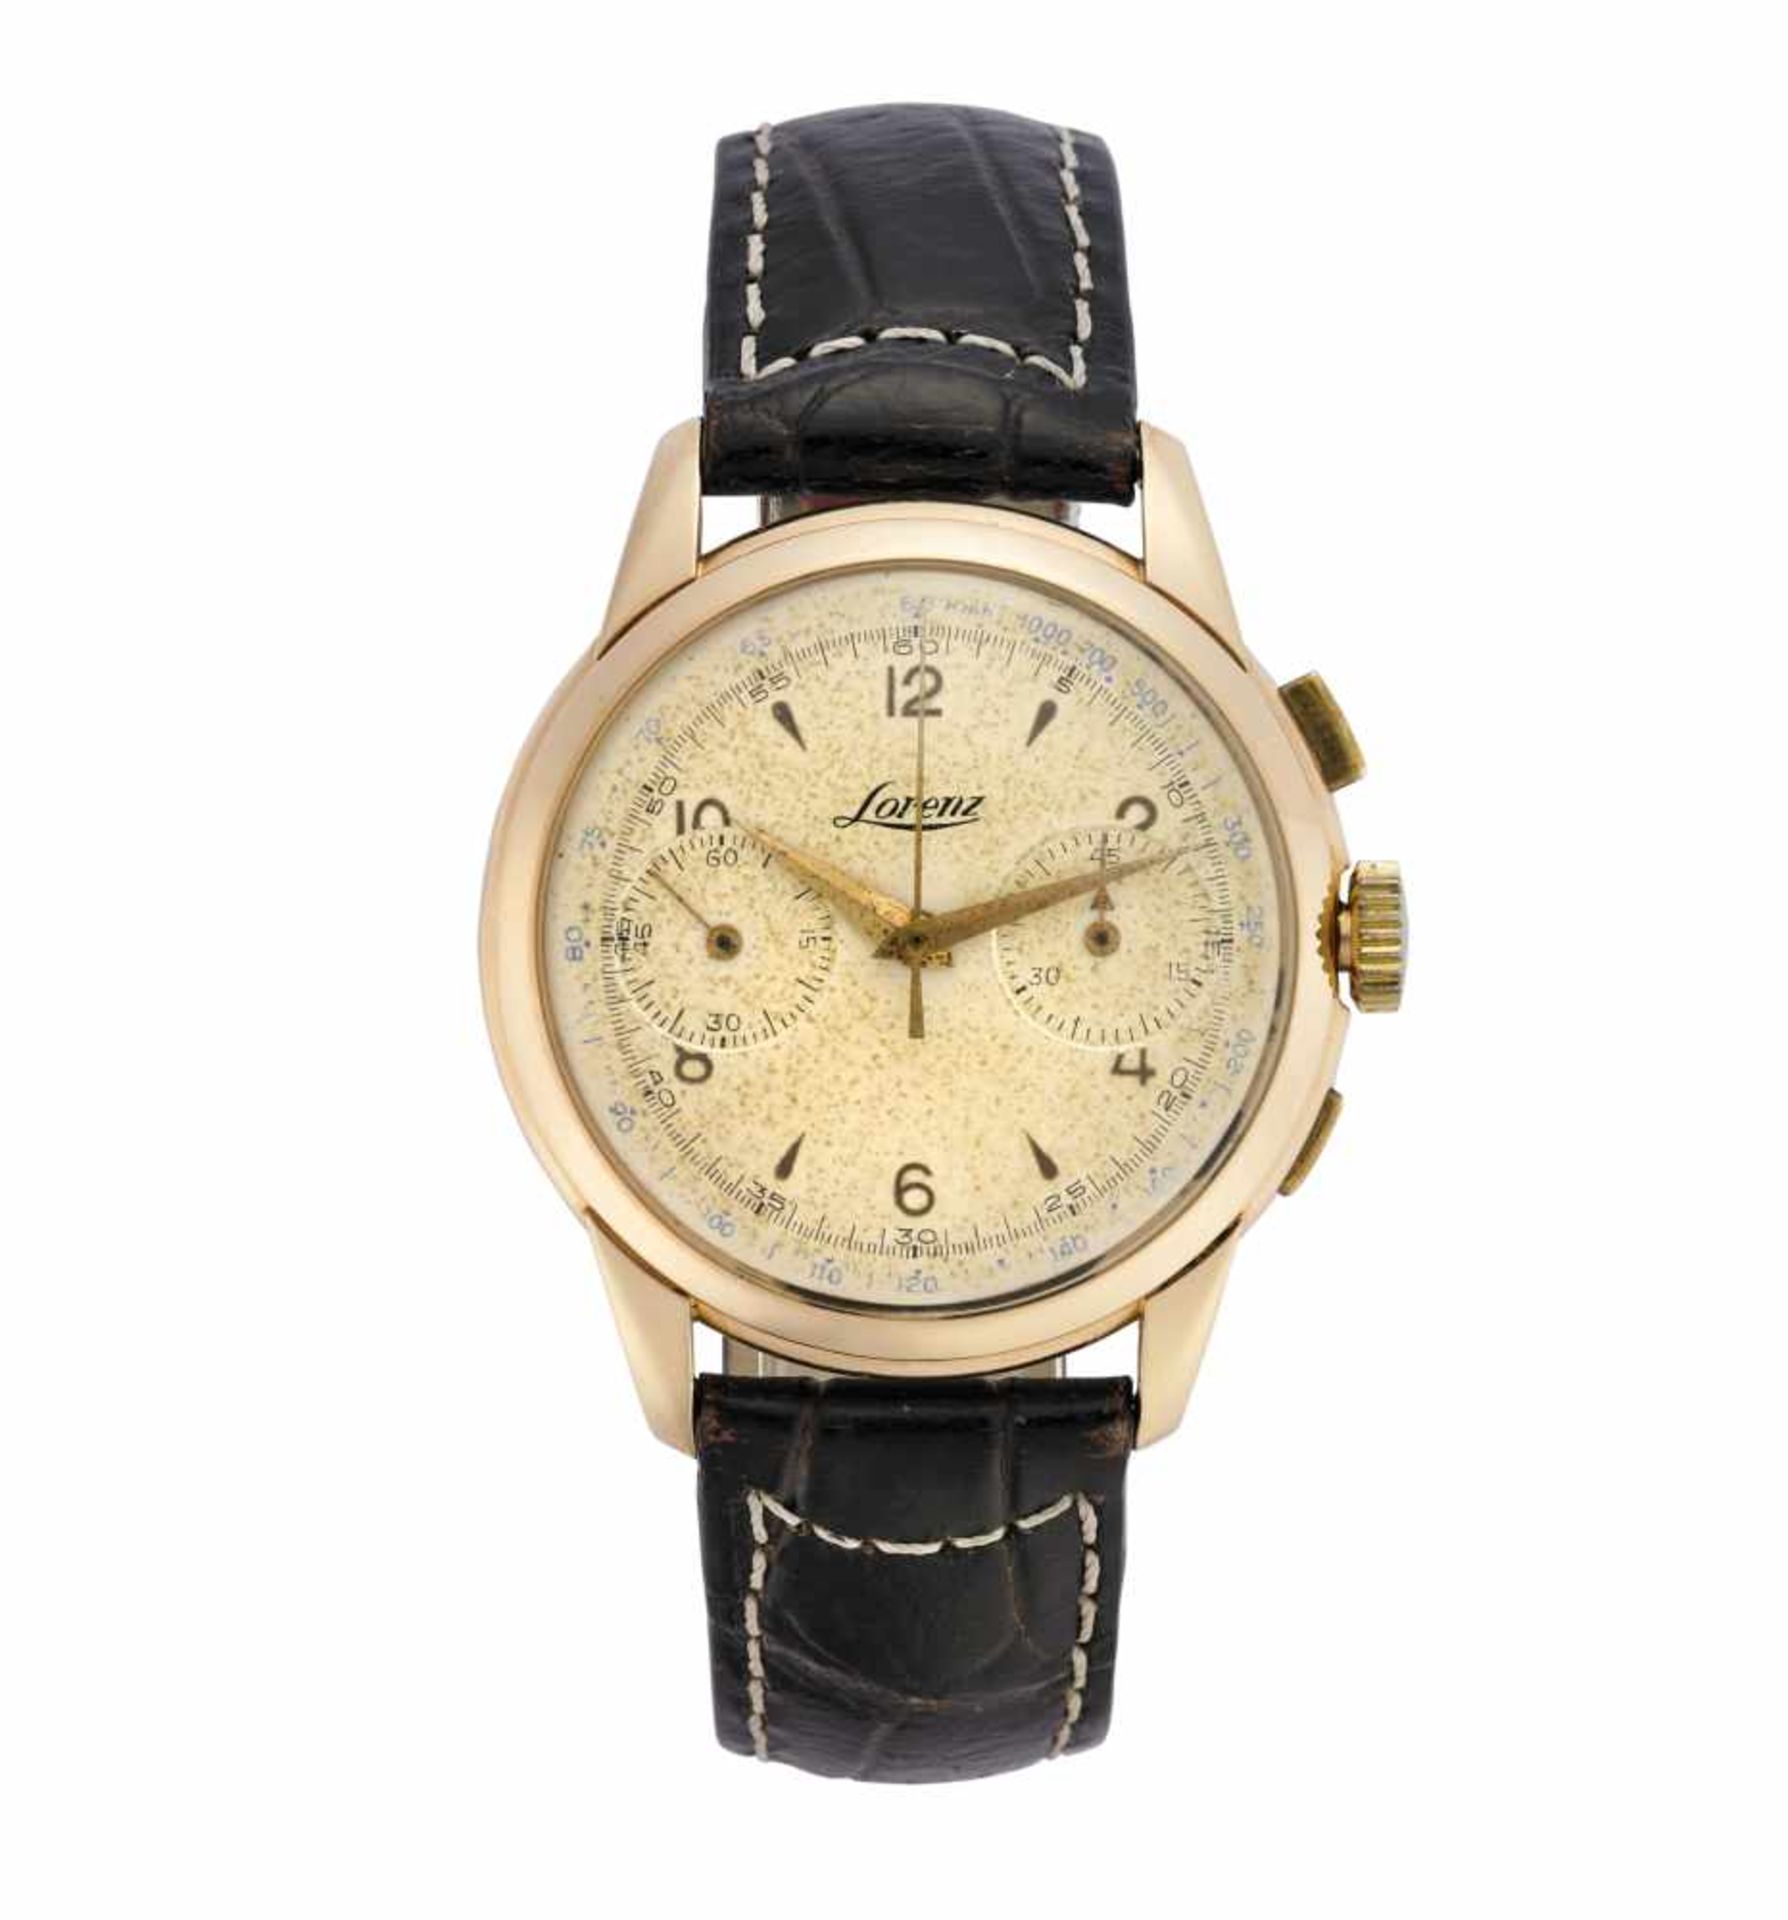 LORENZ, CronografoGent's pink 18K gold wristwatch1940sDial signedManual-wind movementCream dial with